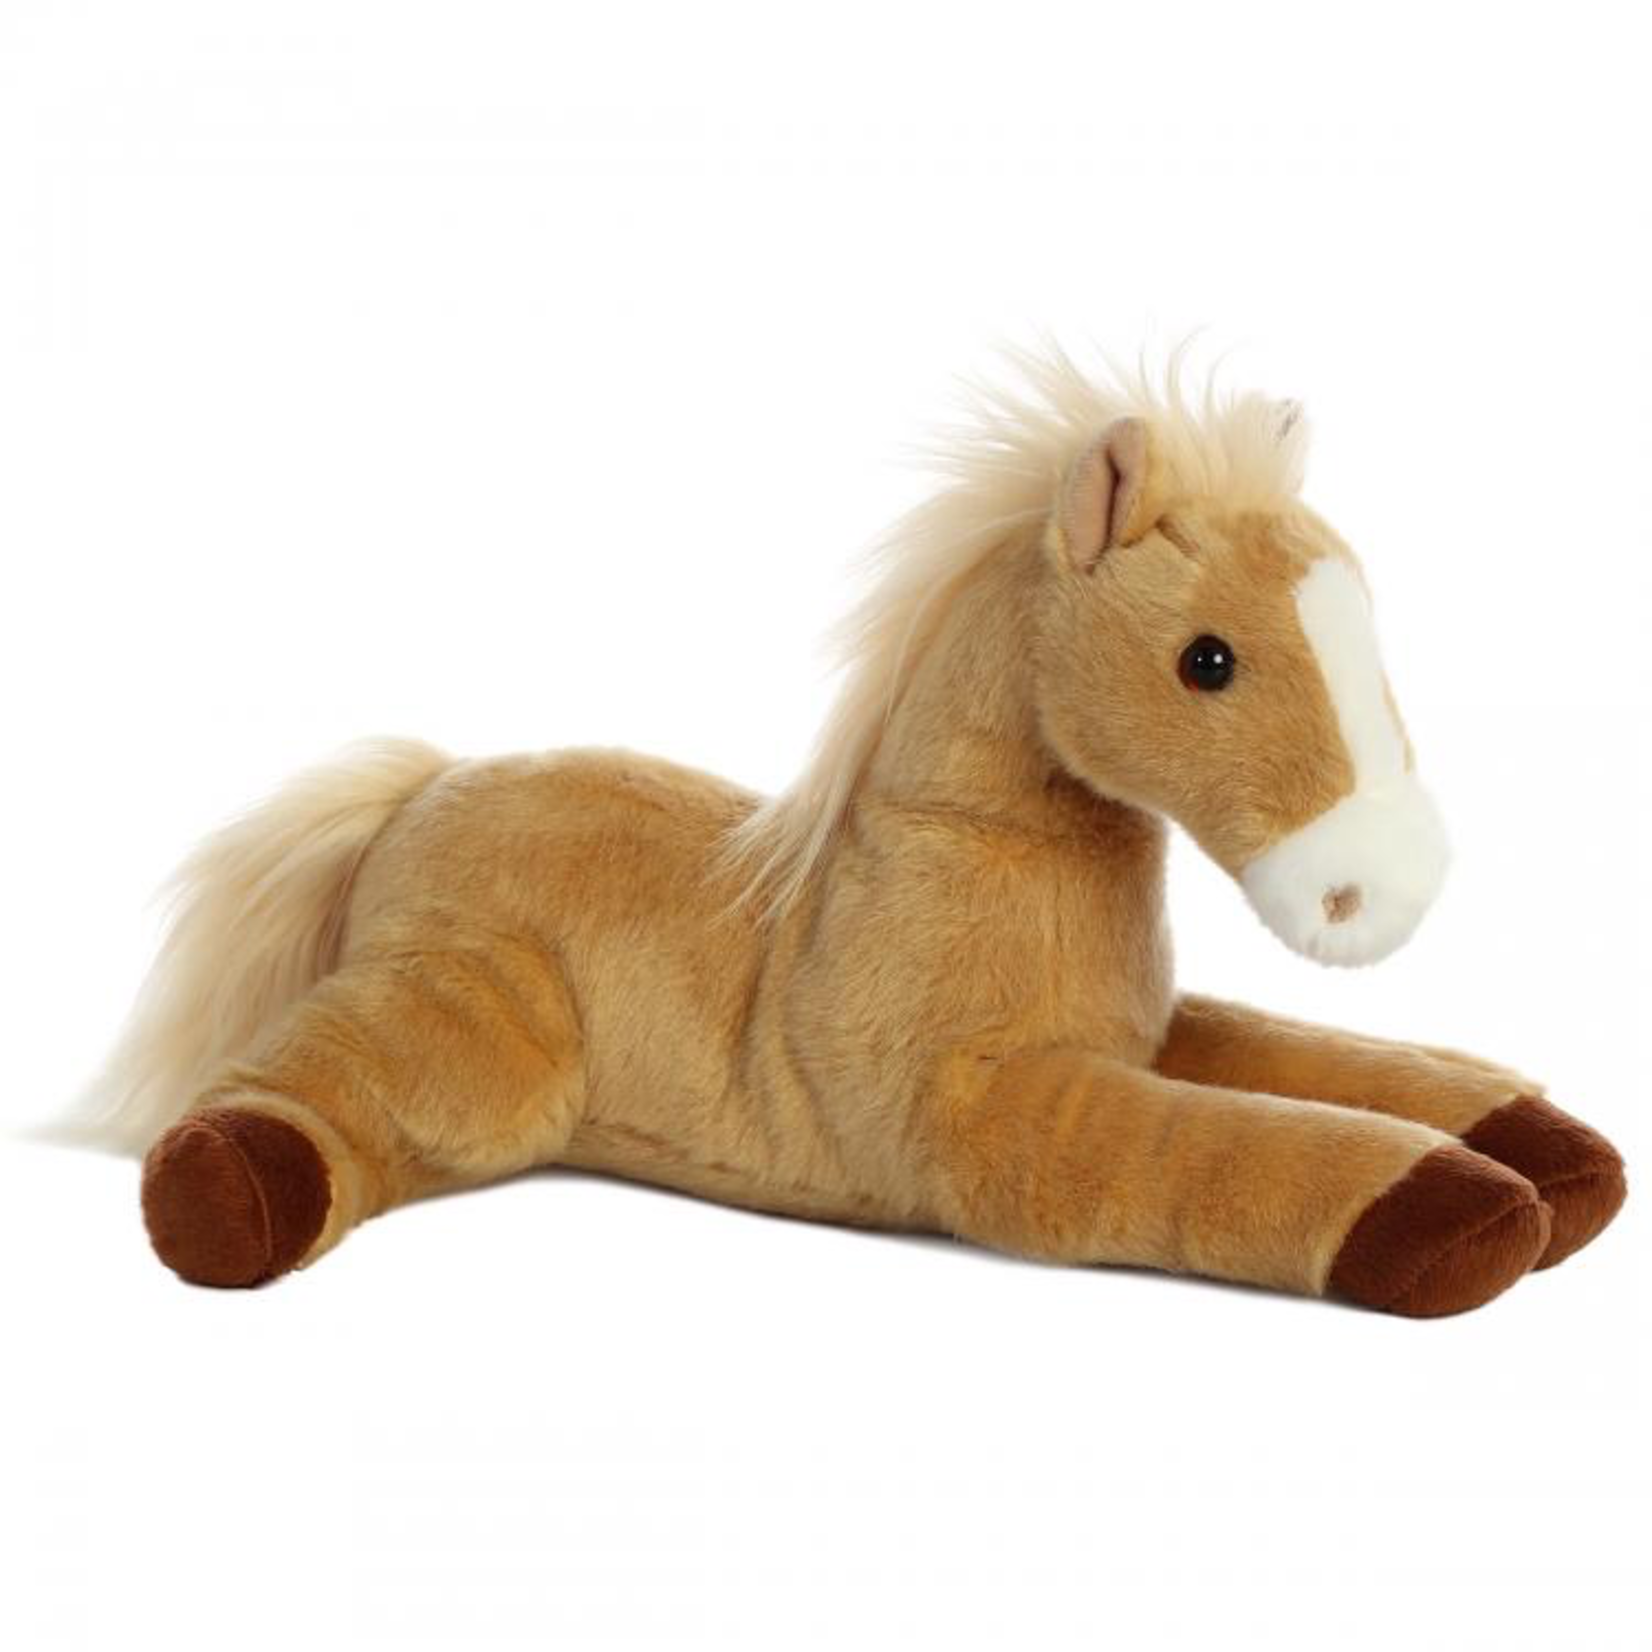 12” Plush Palomino Horse